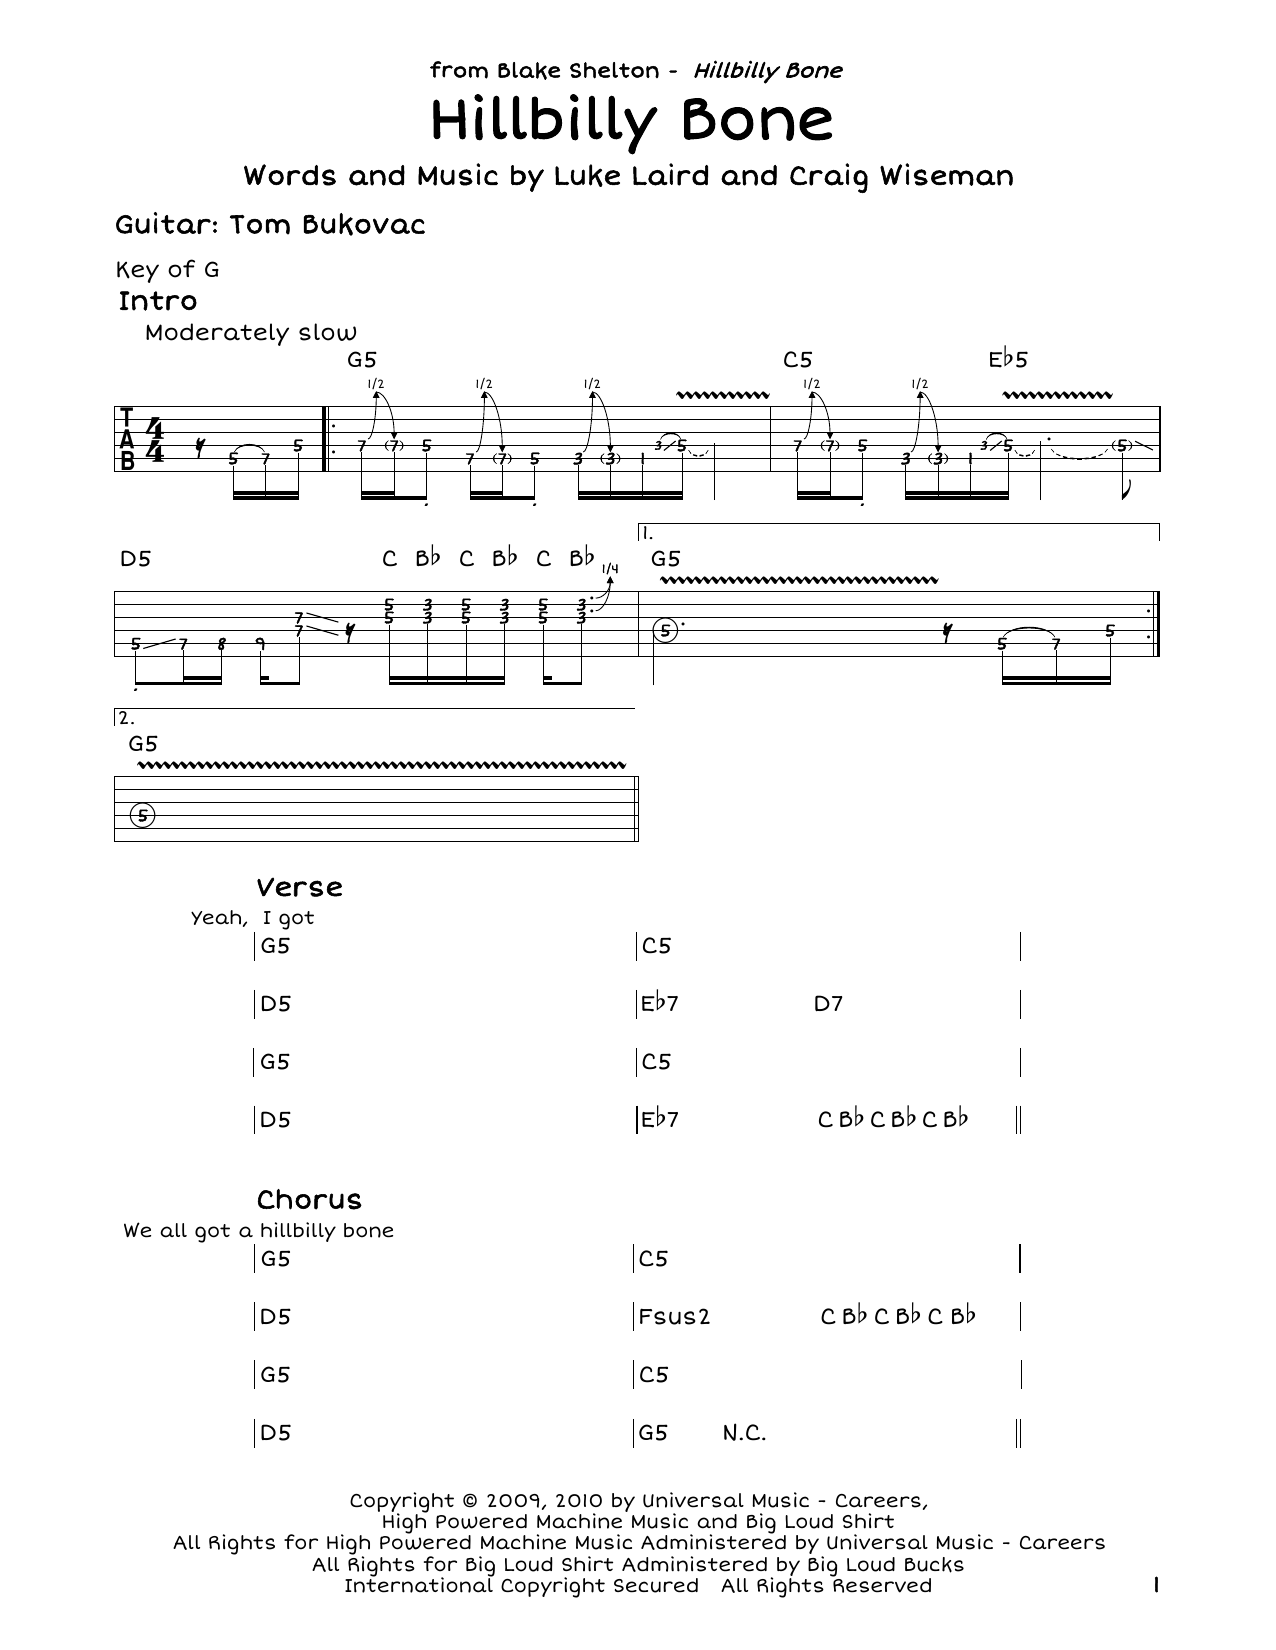 Blake Shelton Hillbilly Bone (feat. Trace Adkins) Sheet Music Notes & Chords for Guitar Tab - Download or Print PDF